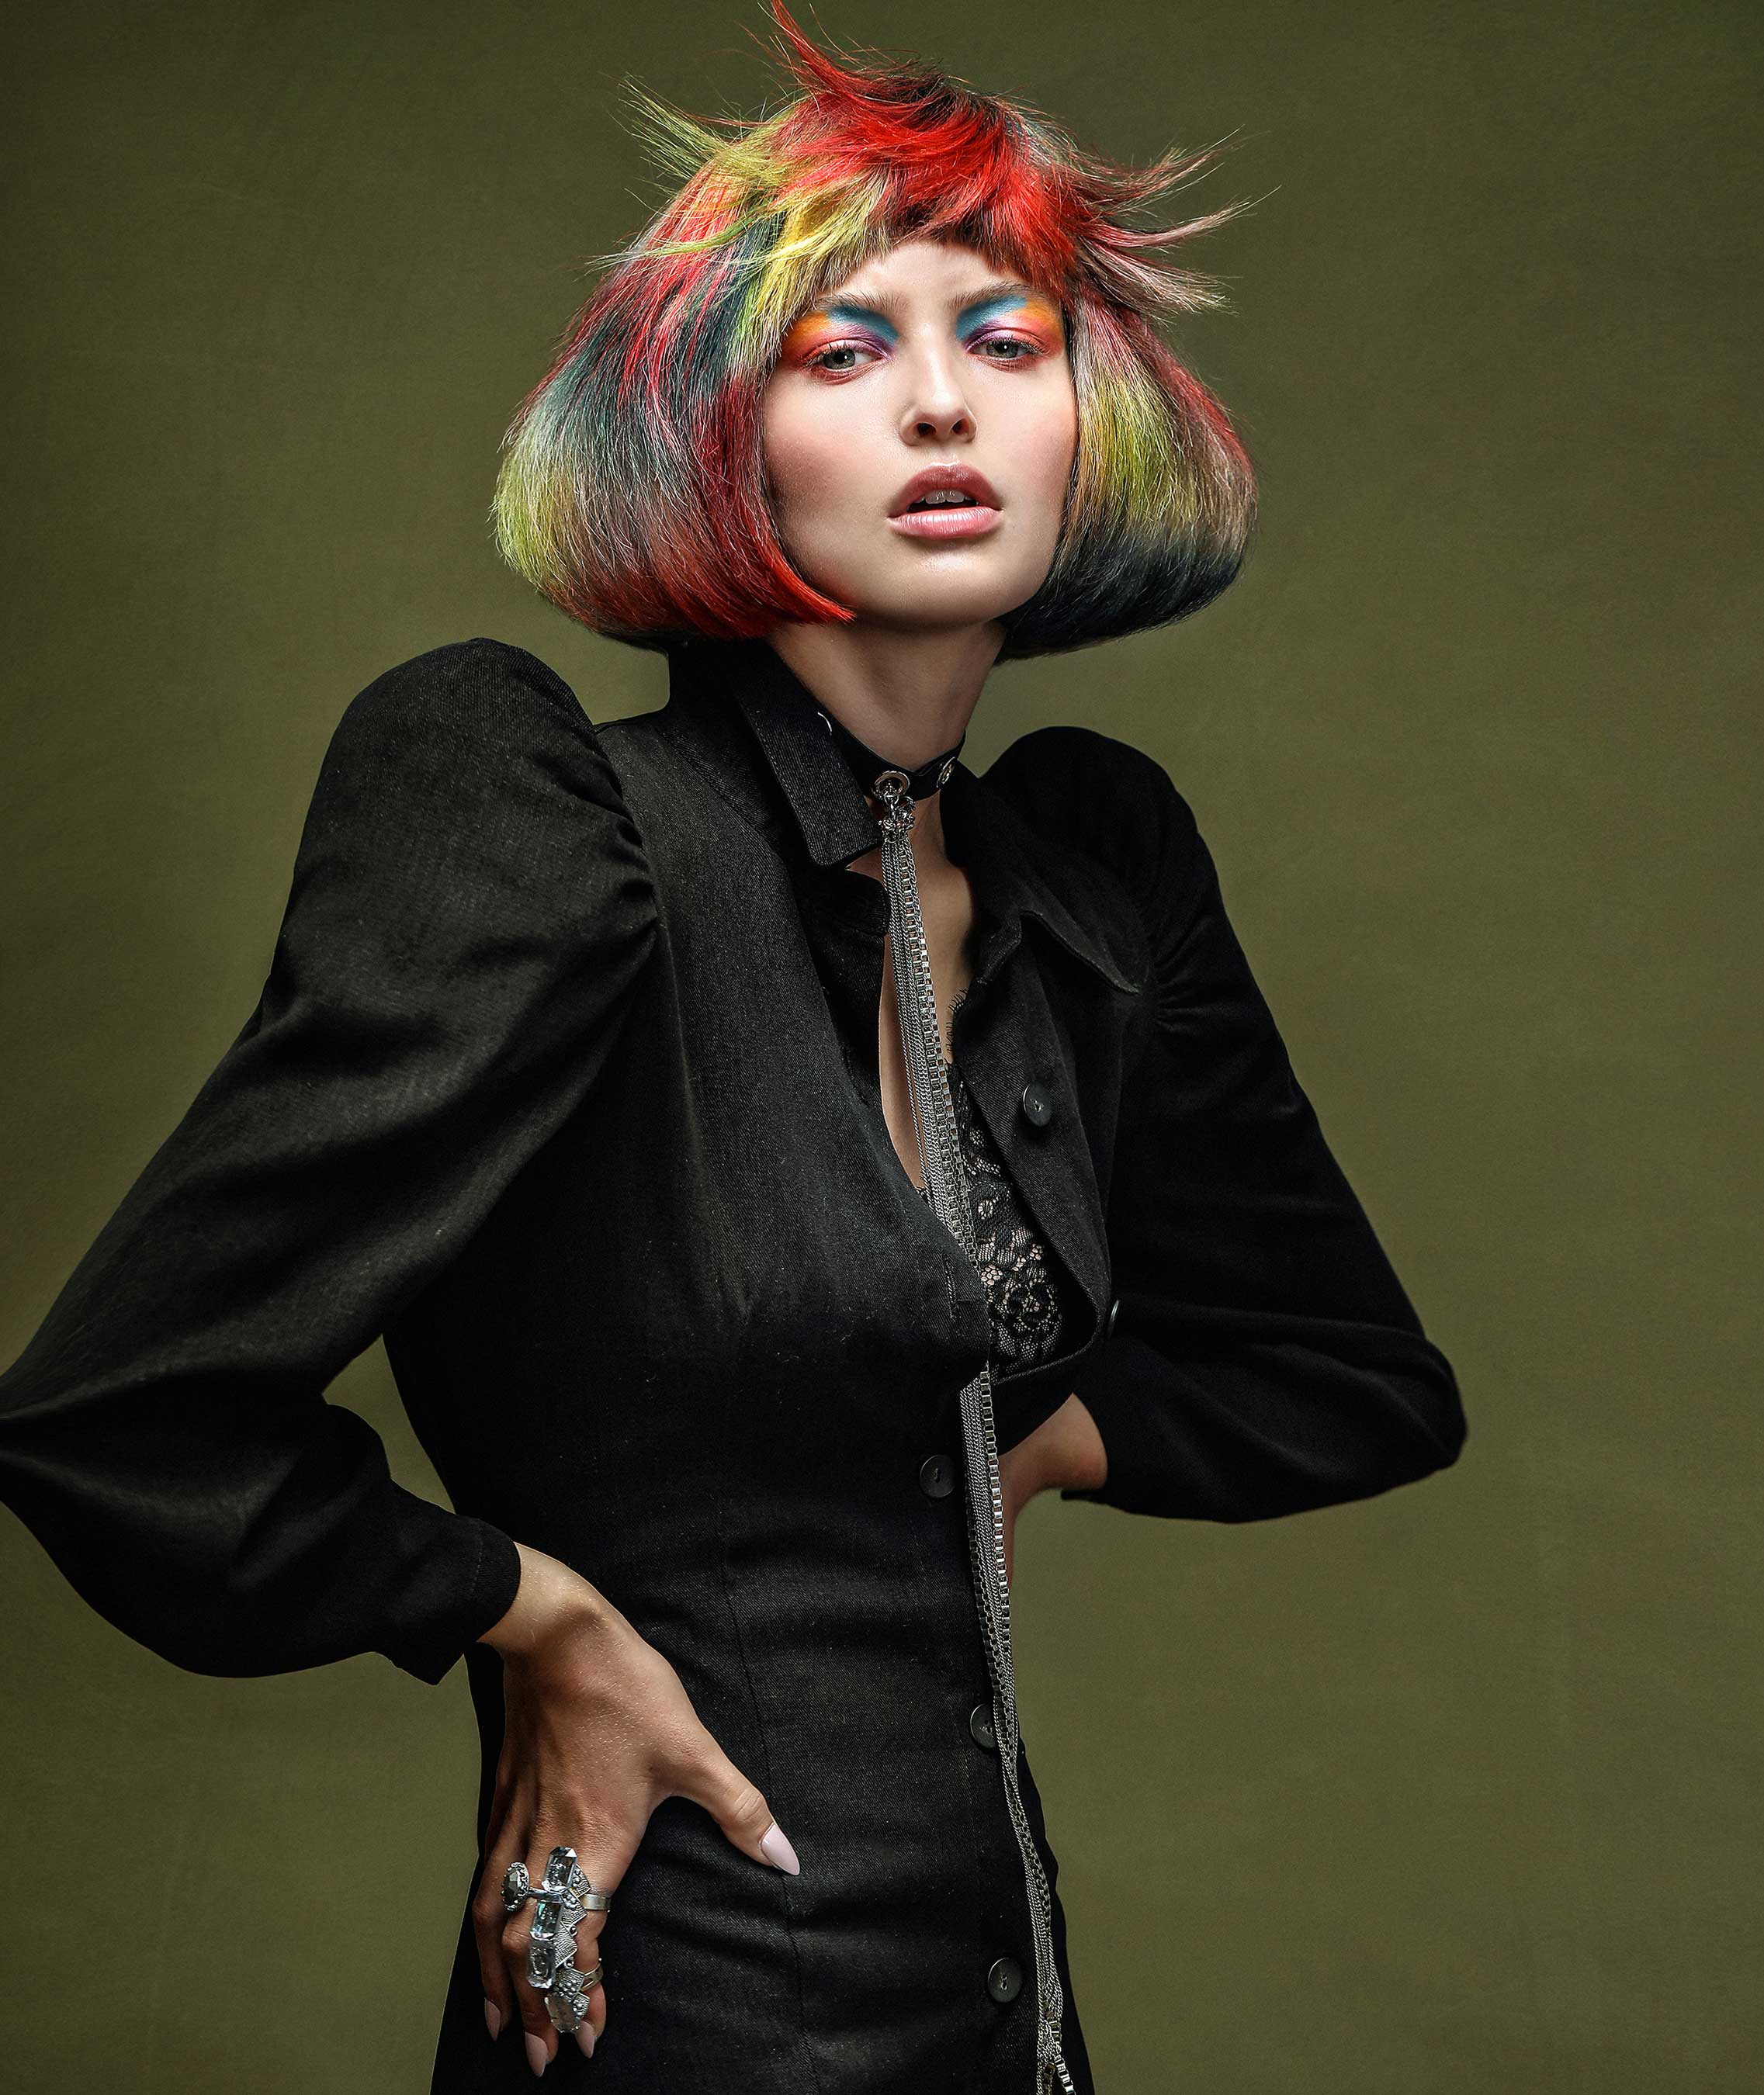 hair-photographers-color-vriesinga-fashion-beauty-london-toronto-ontario-paula-tizzard-naha-contessa-competition